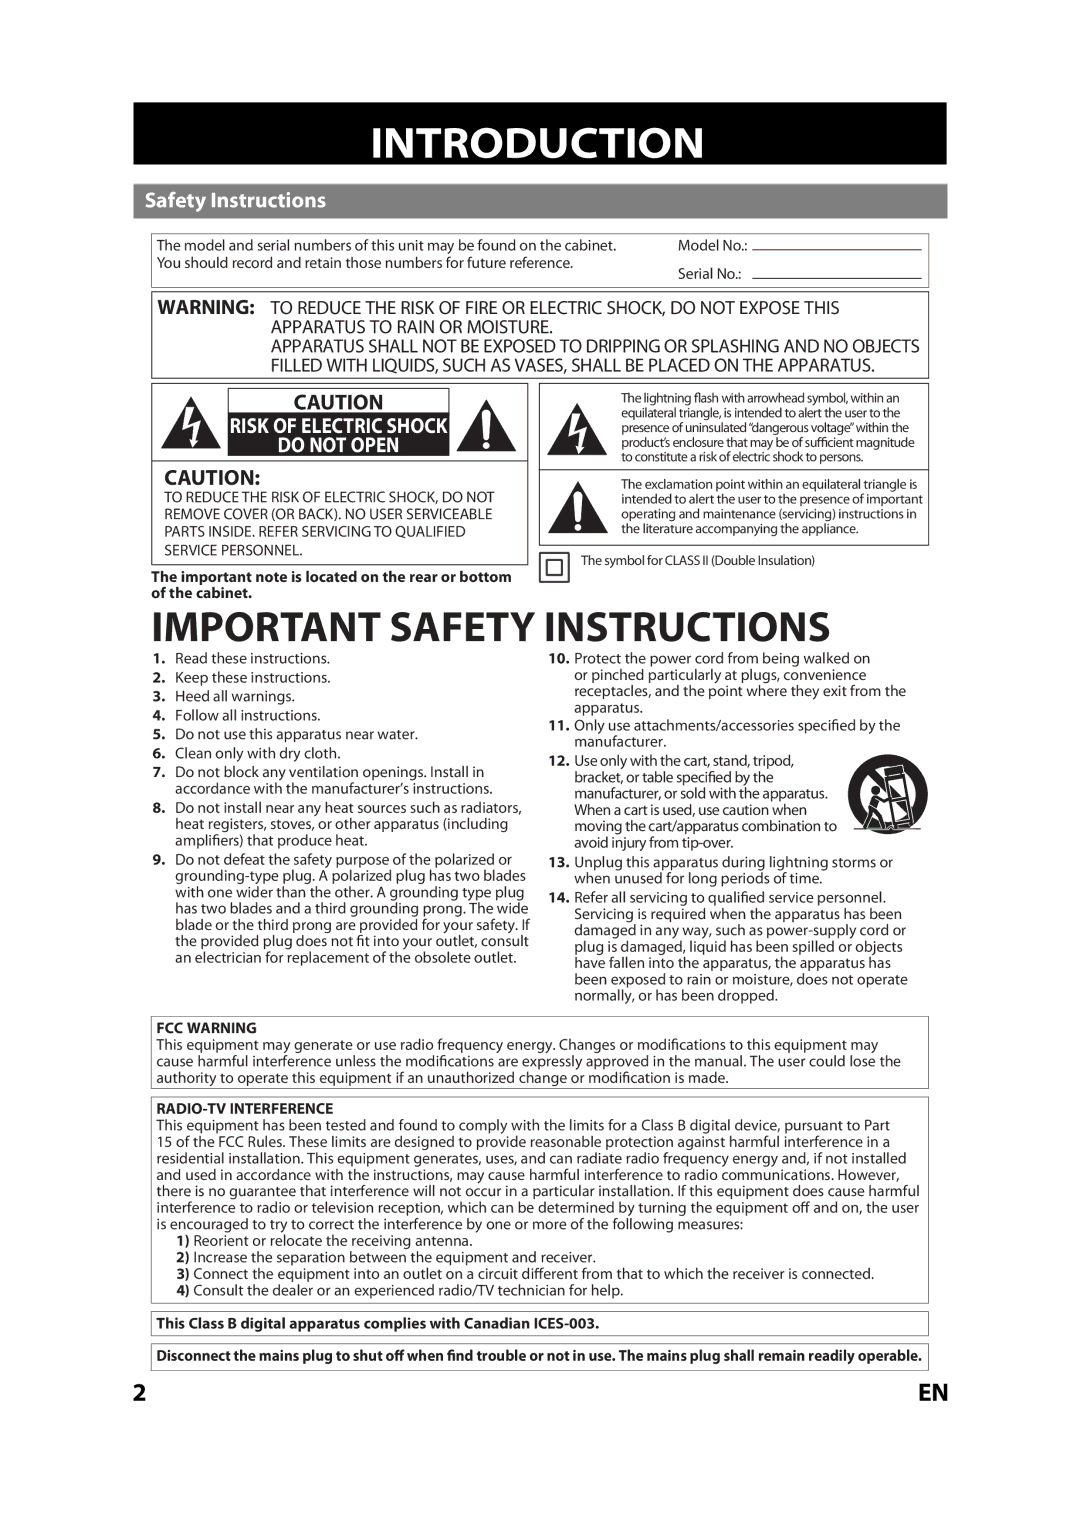 Magnavox MBP110V/F7 owner manual Introduction, Safety Instructions 